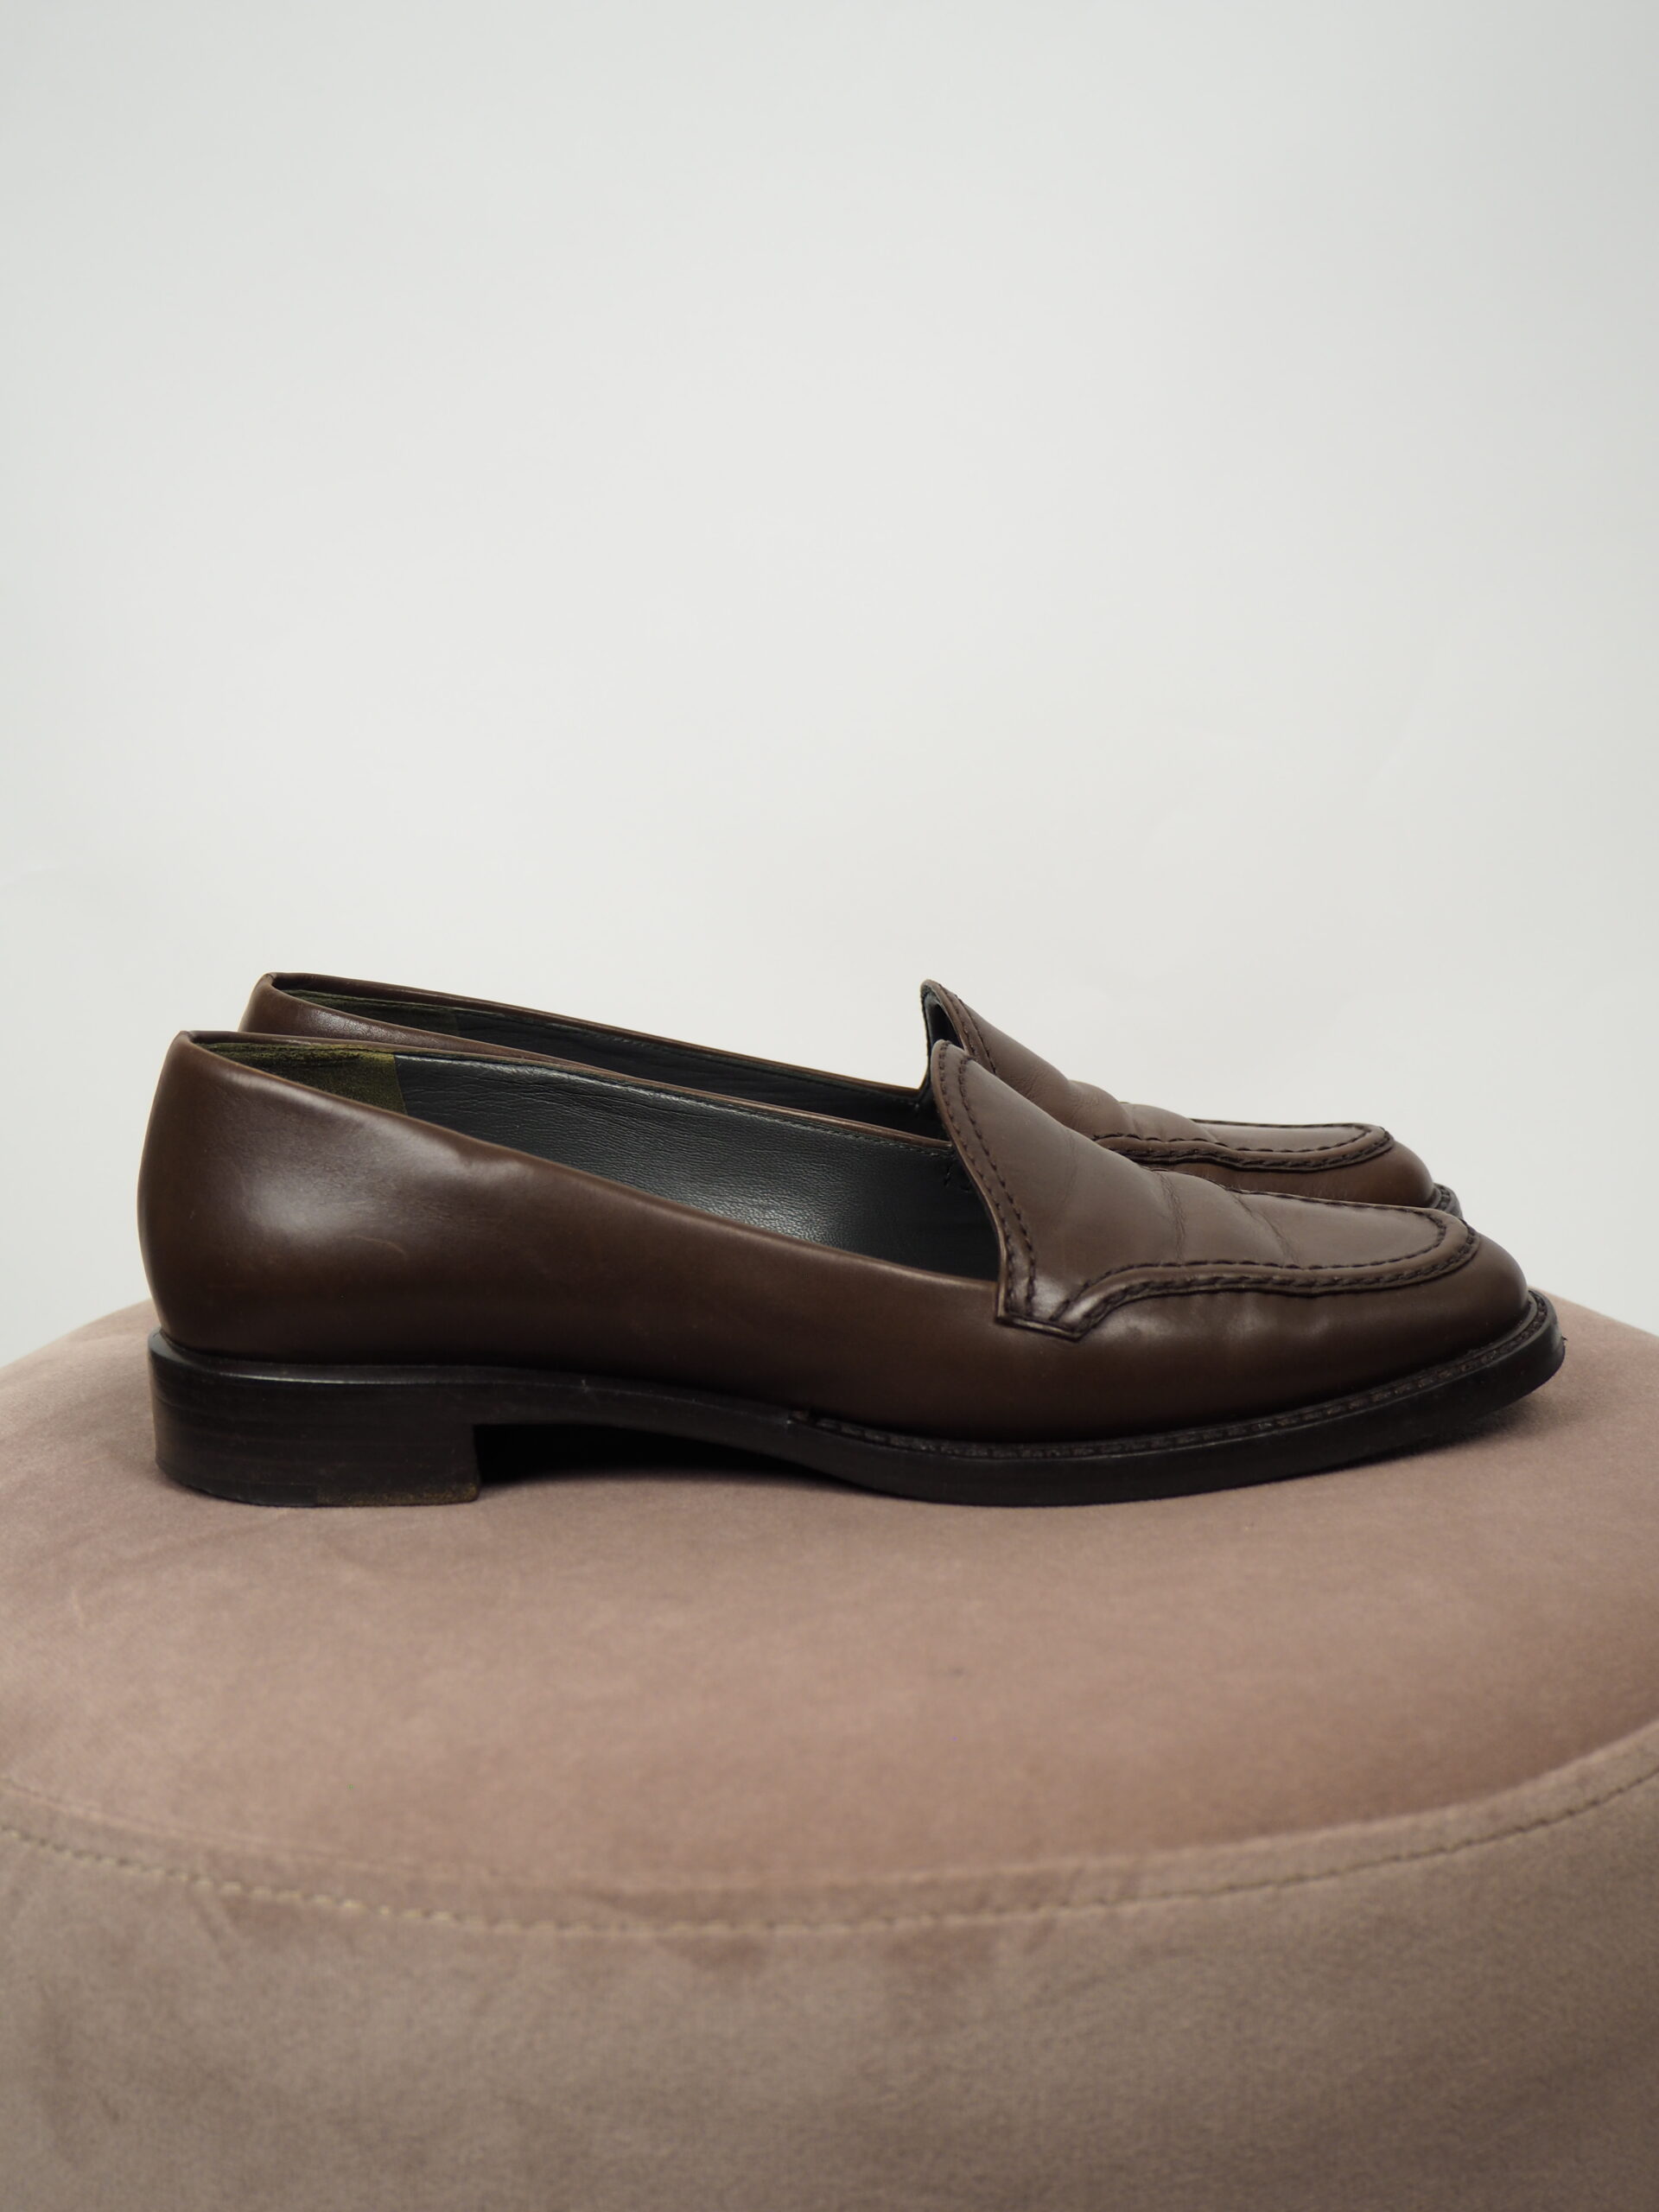 Jil Sander Brown Leather Loafers Size EU 38 – Luxeparel